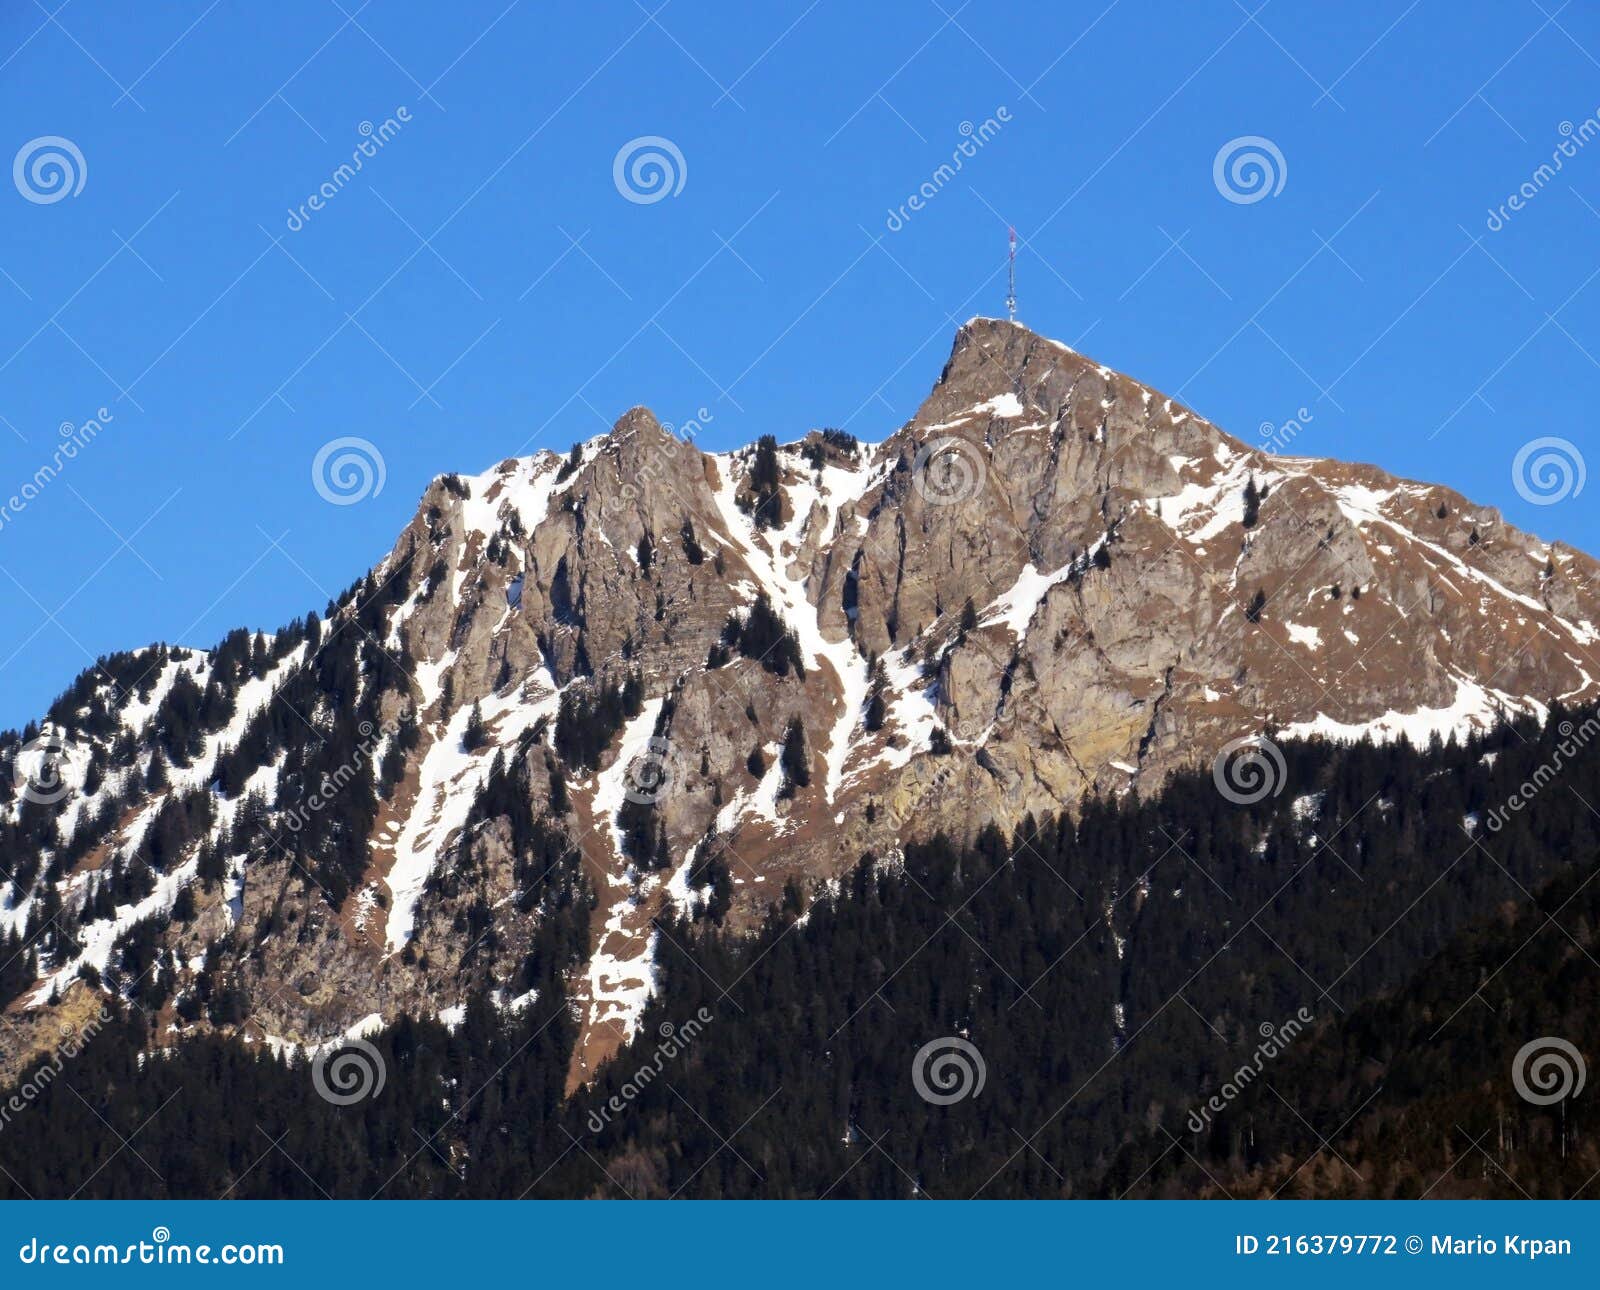 rocky alpine mountain peak le chamossaire located in a mountain massif of the bernese alps alpes bernoises, villeneuve vd